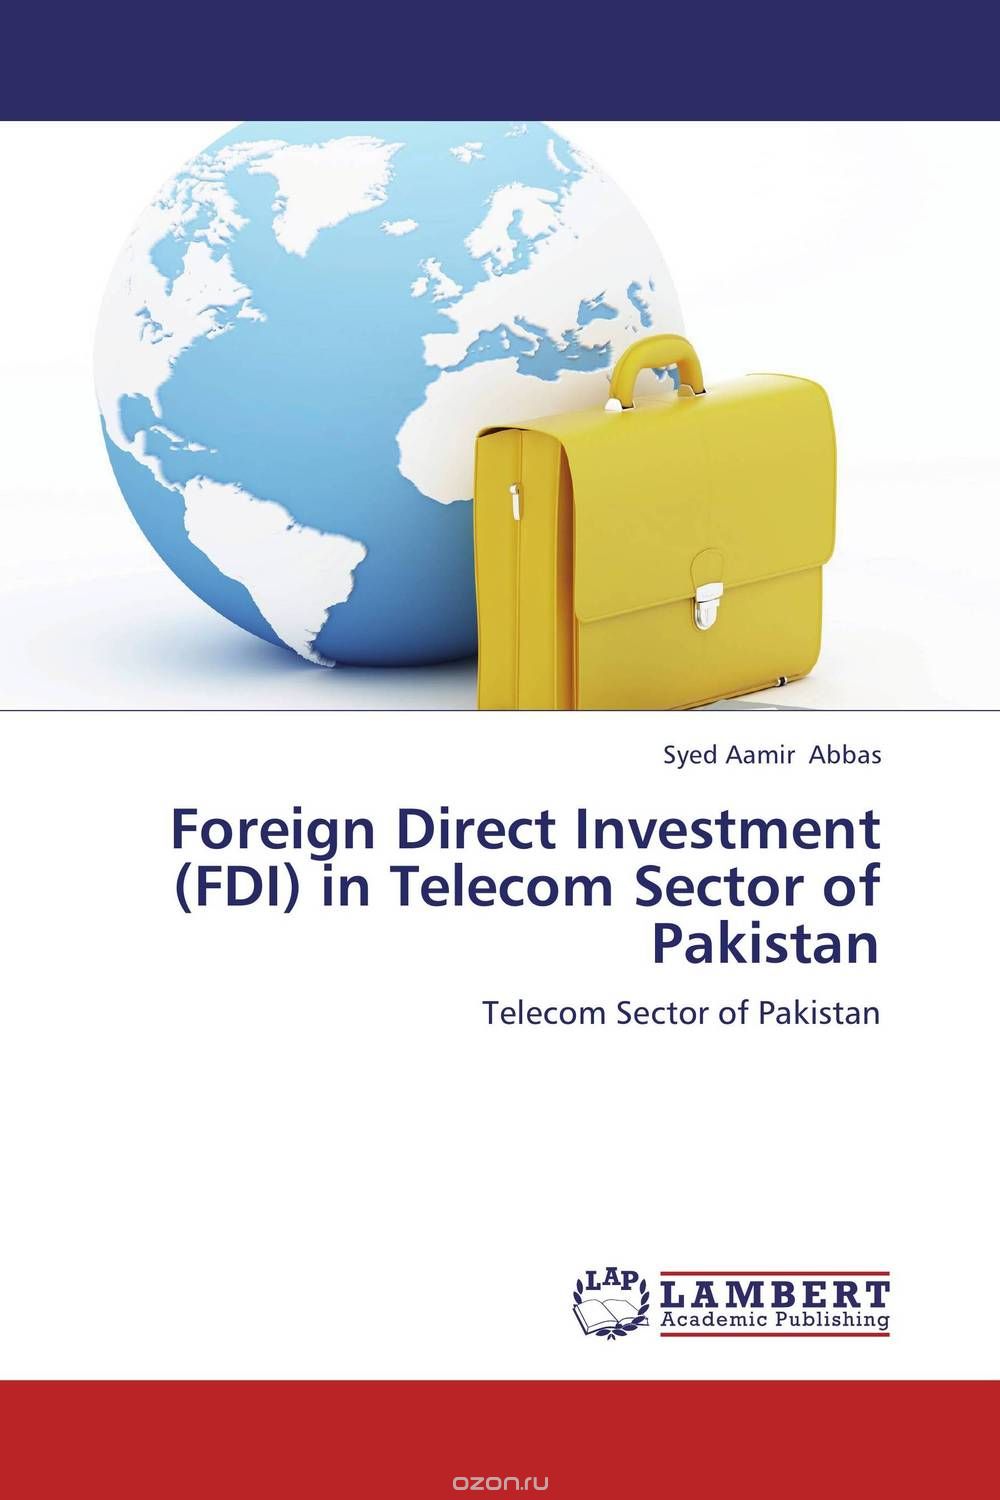 Скачать книгу "Foreign Direct Investment (FDI) in Telecom Sector of Pakistan"